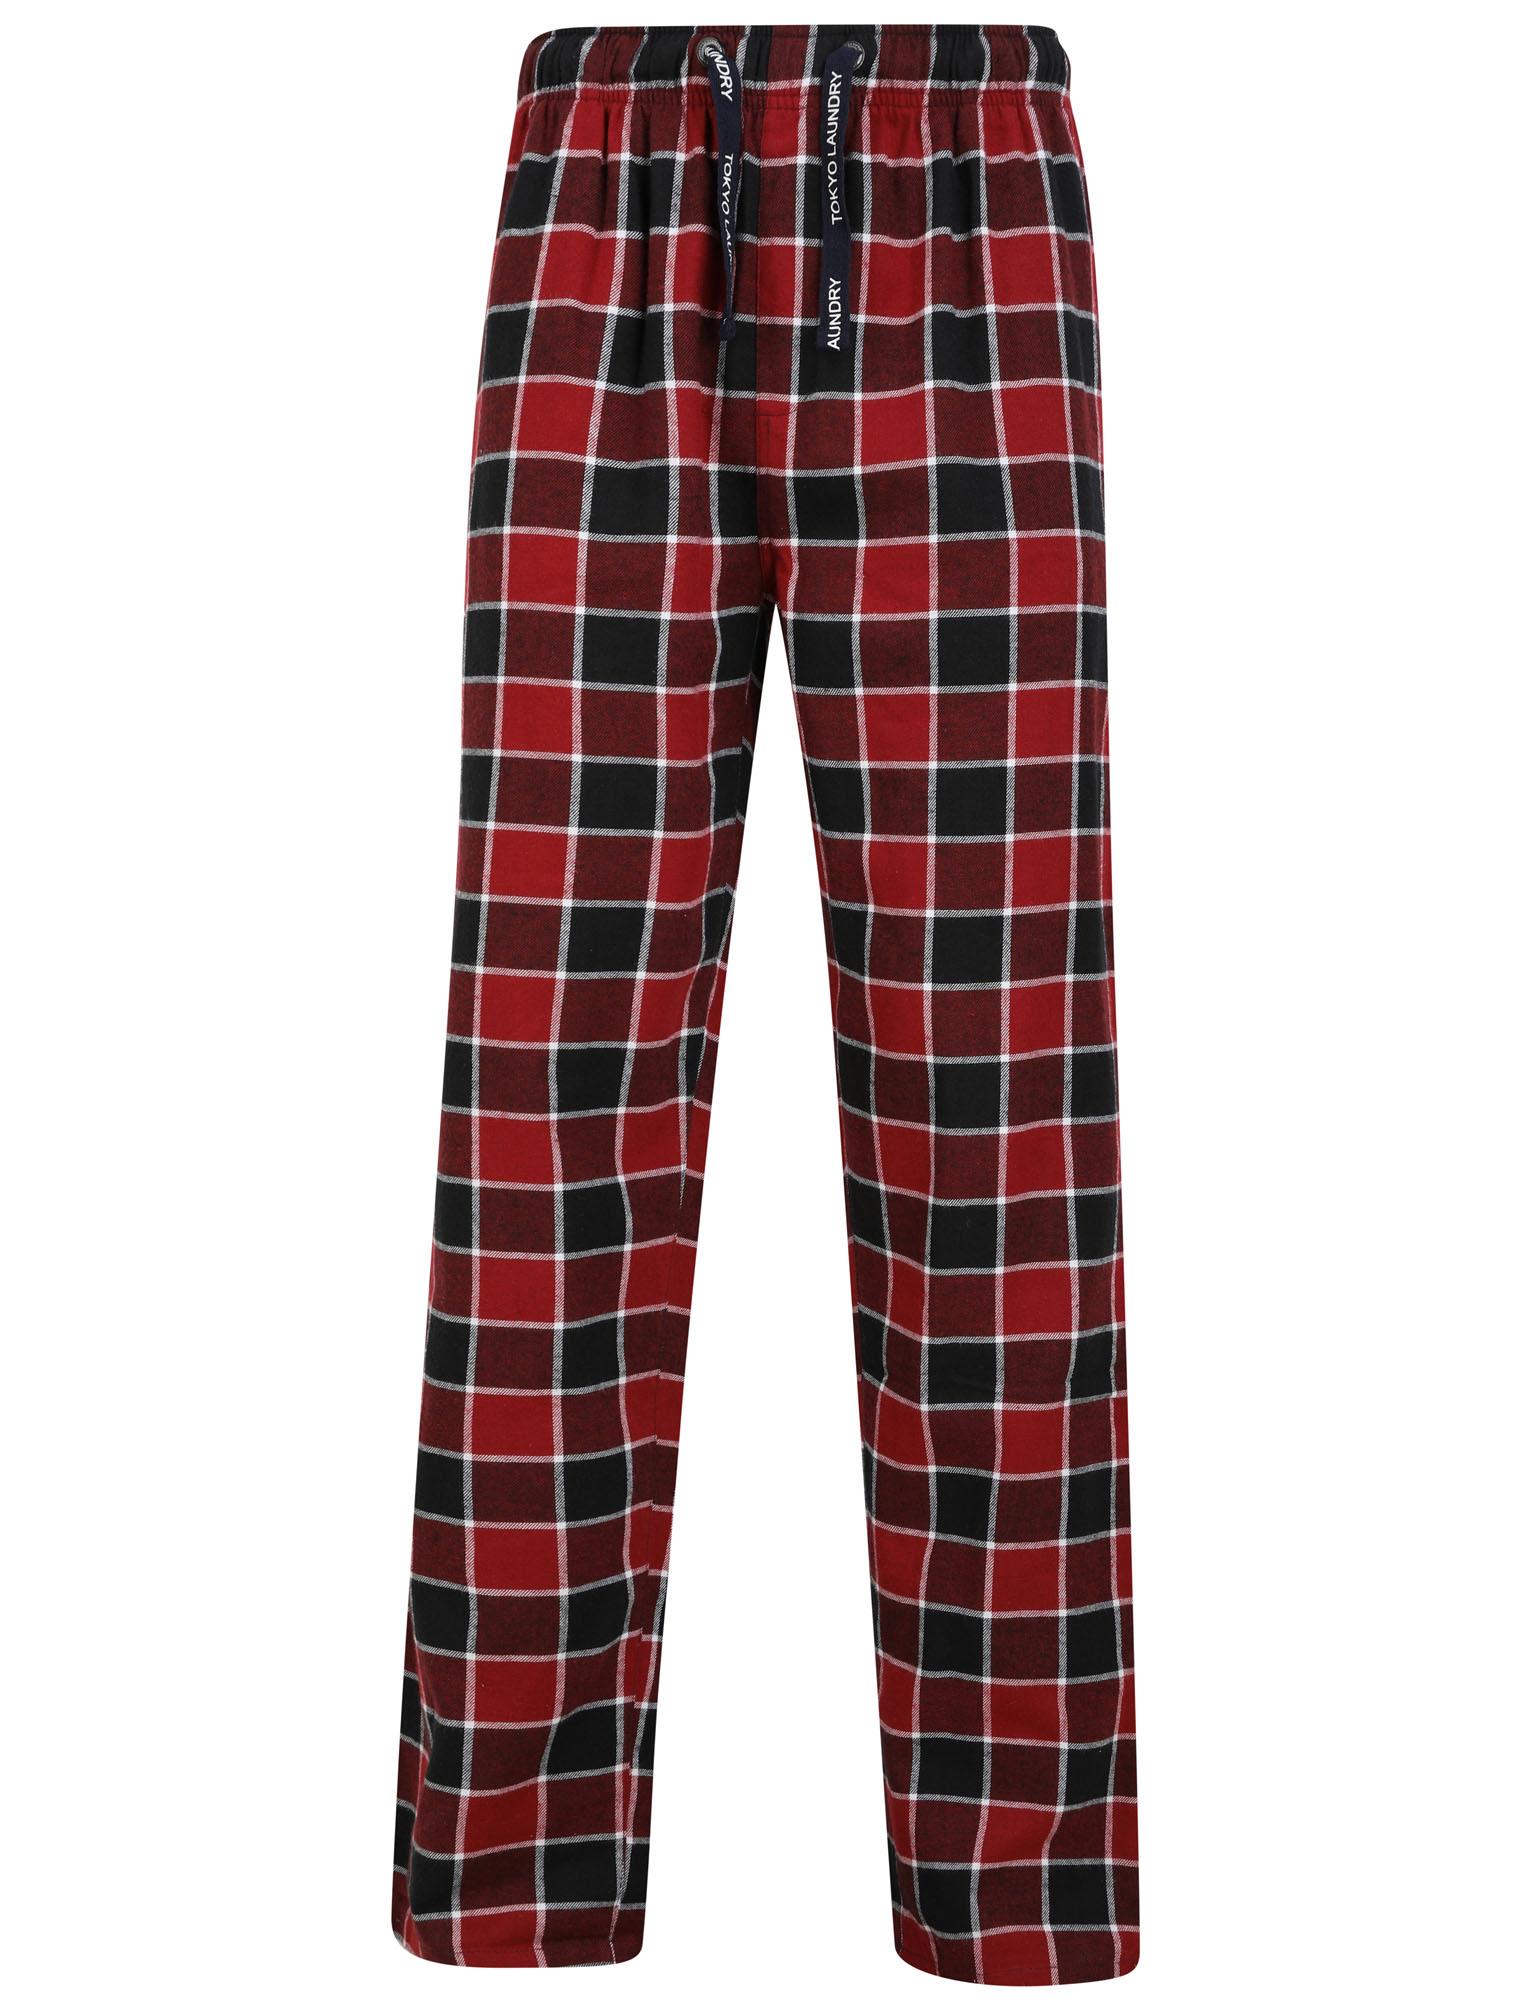 Tokyo Laundry Mens Soft Cotton Jersey Lounge Pants Pyjama Bottoms Nightwear